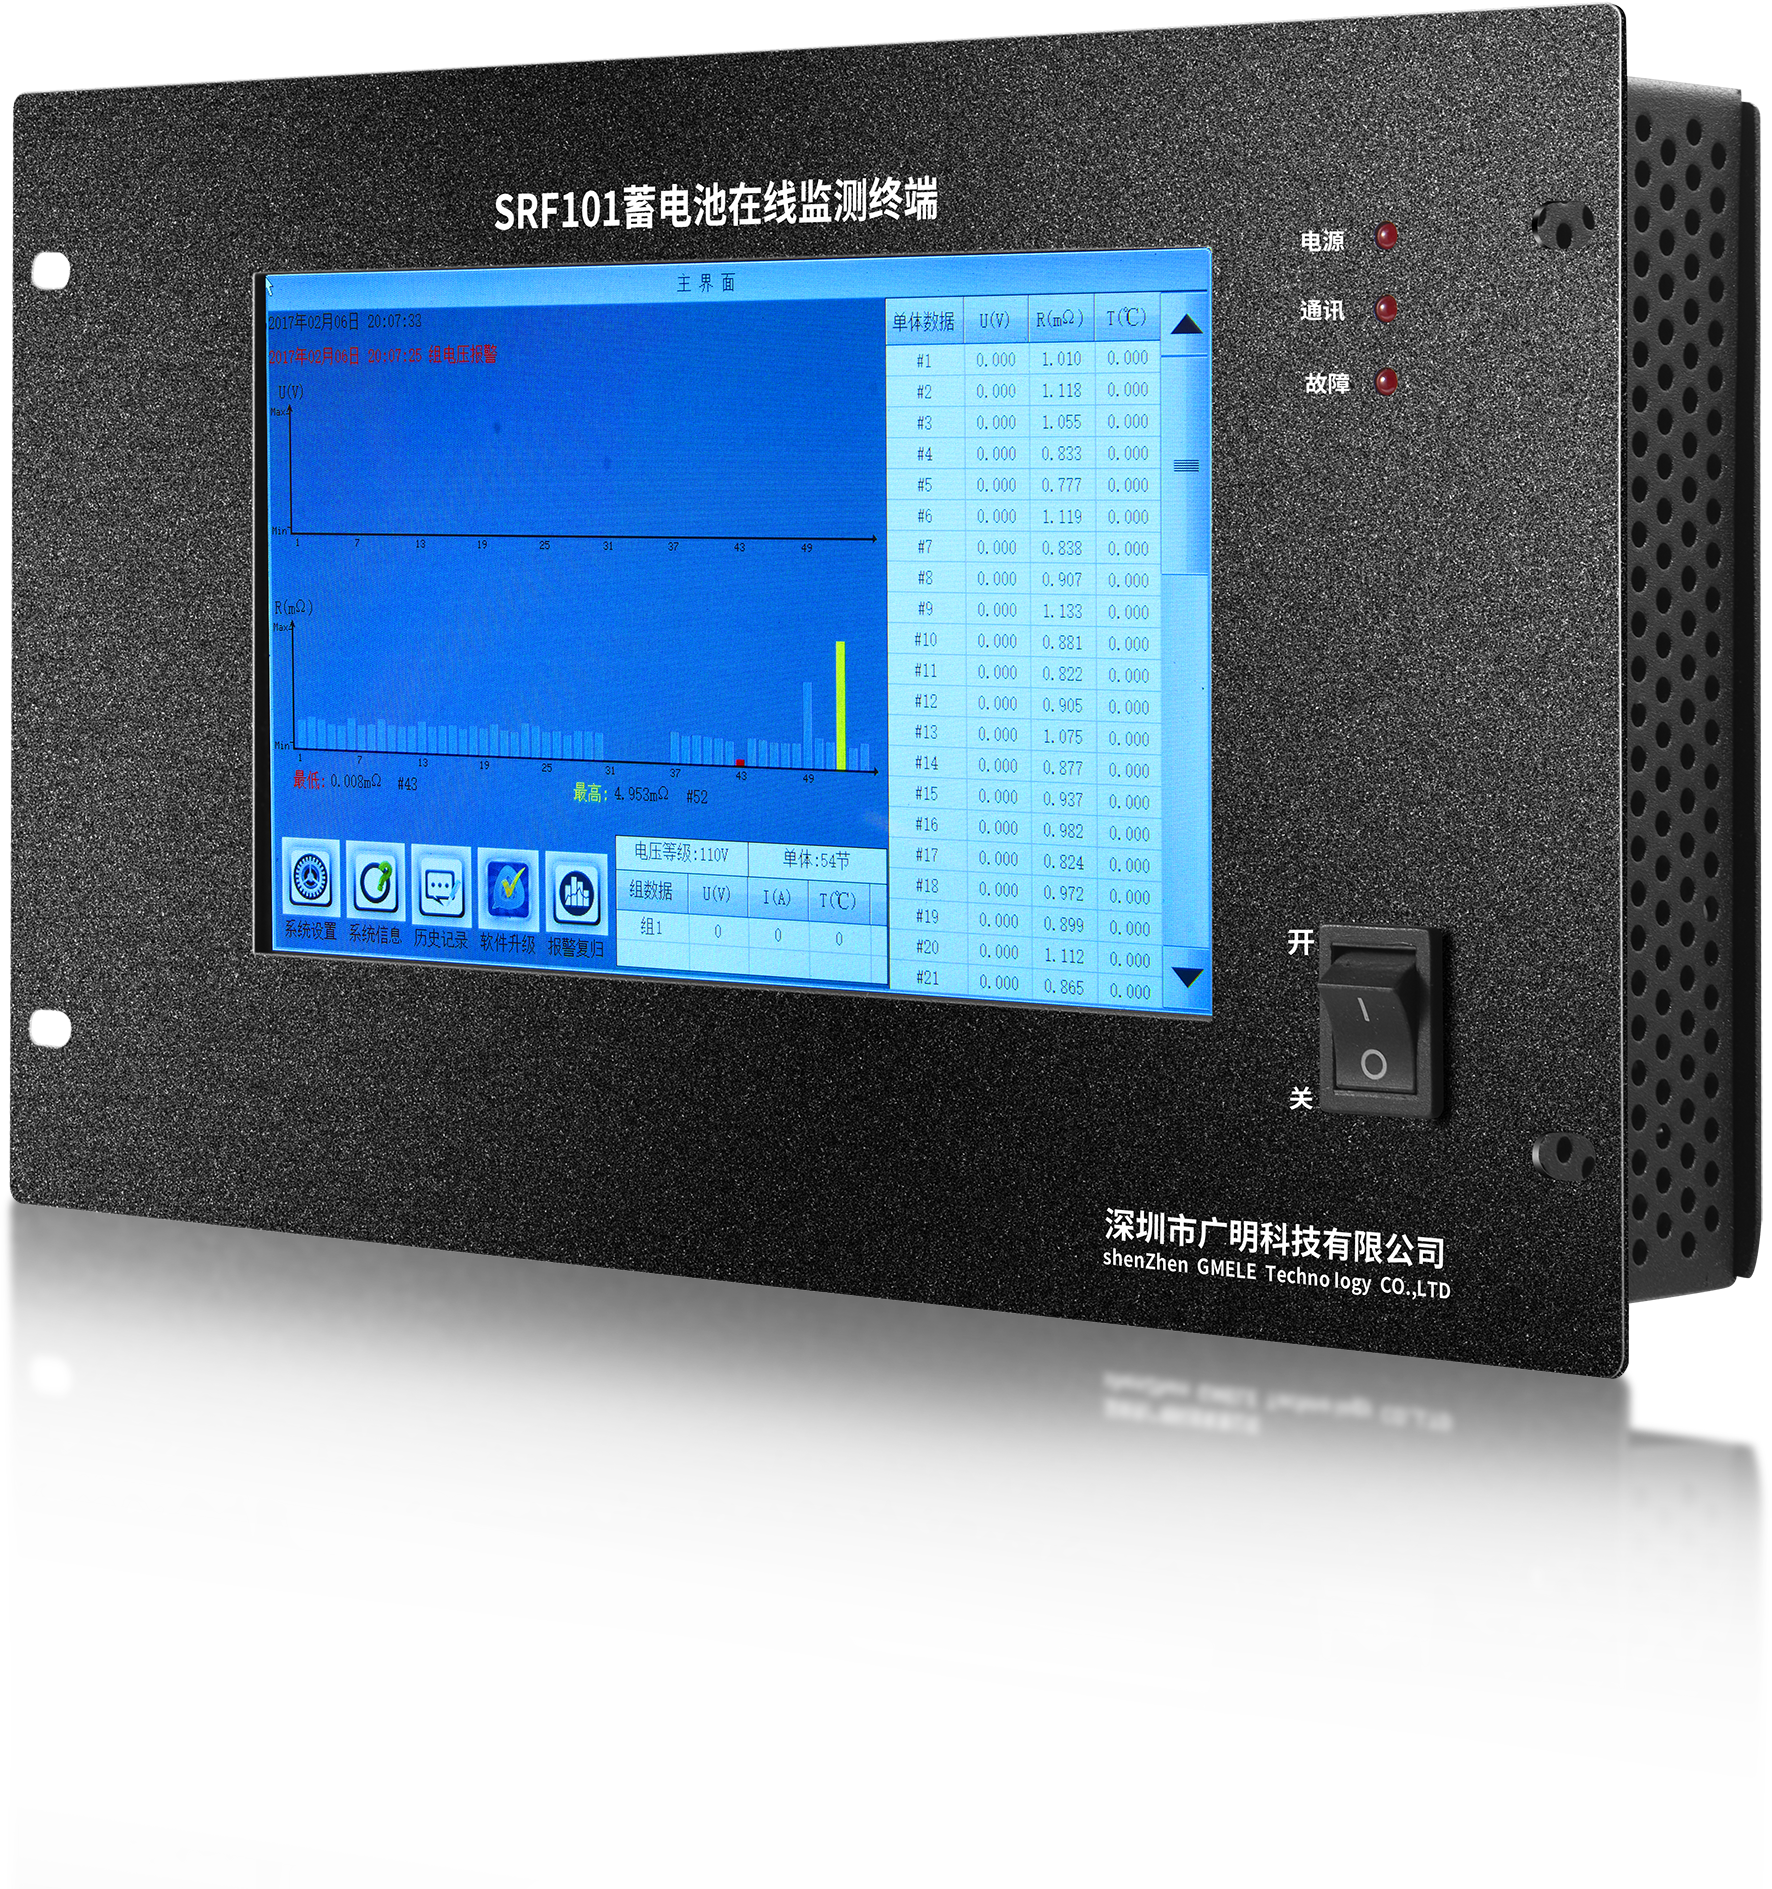 SRF101蓄电池在线监测系统